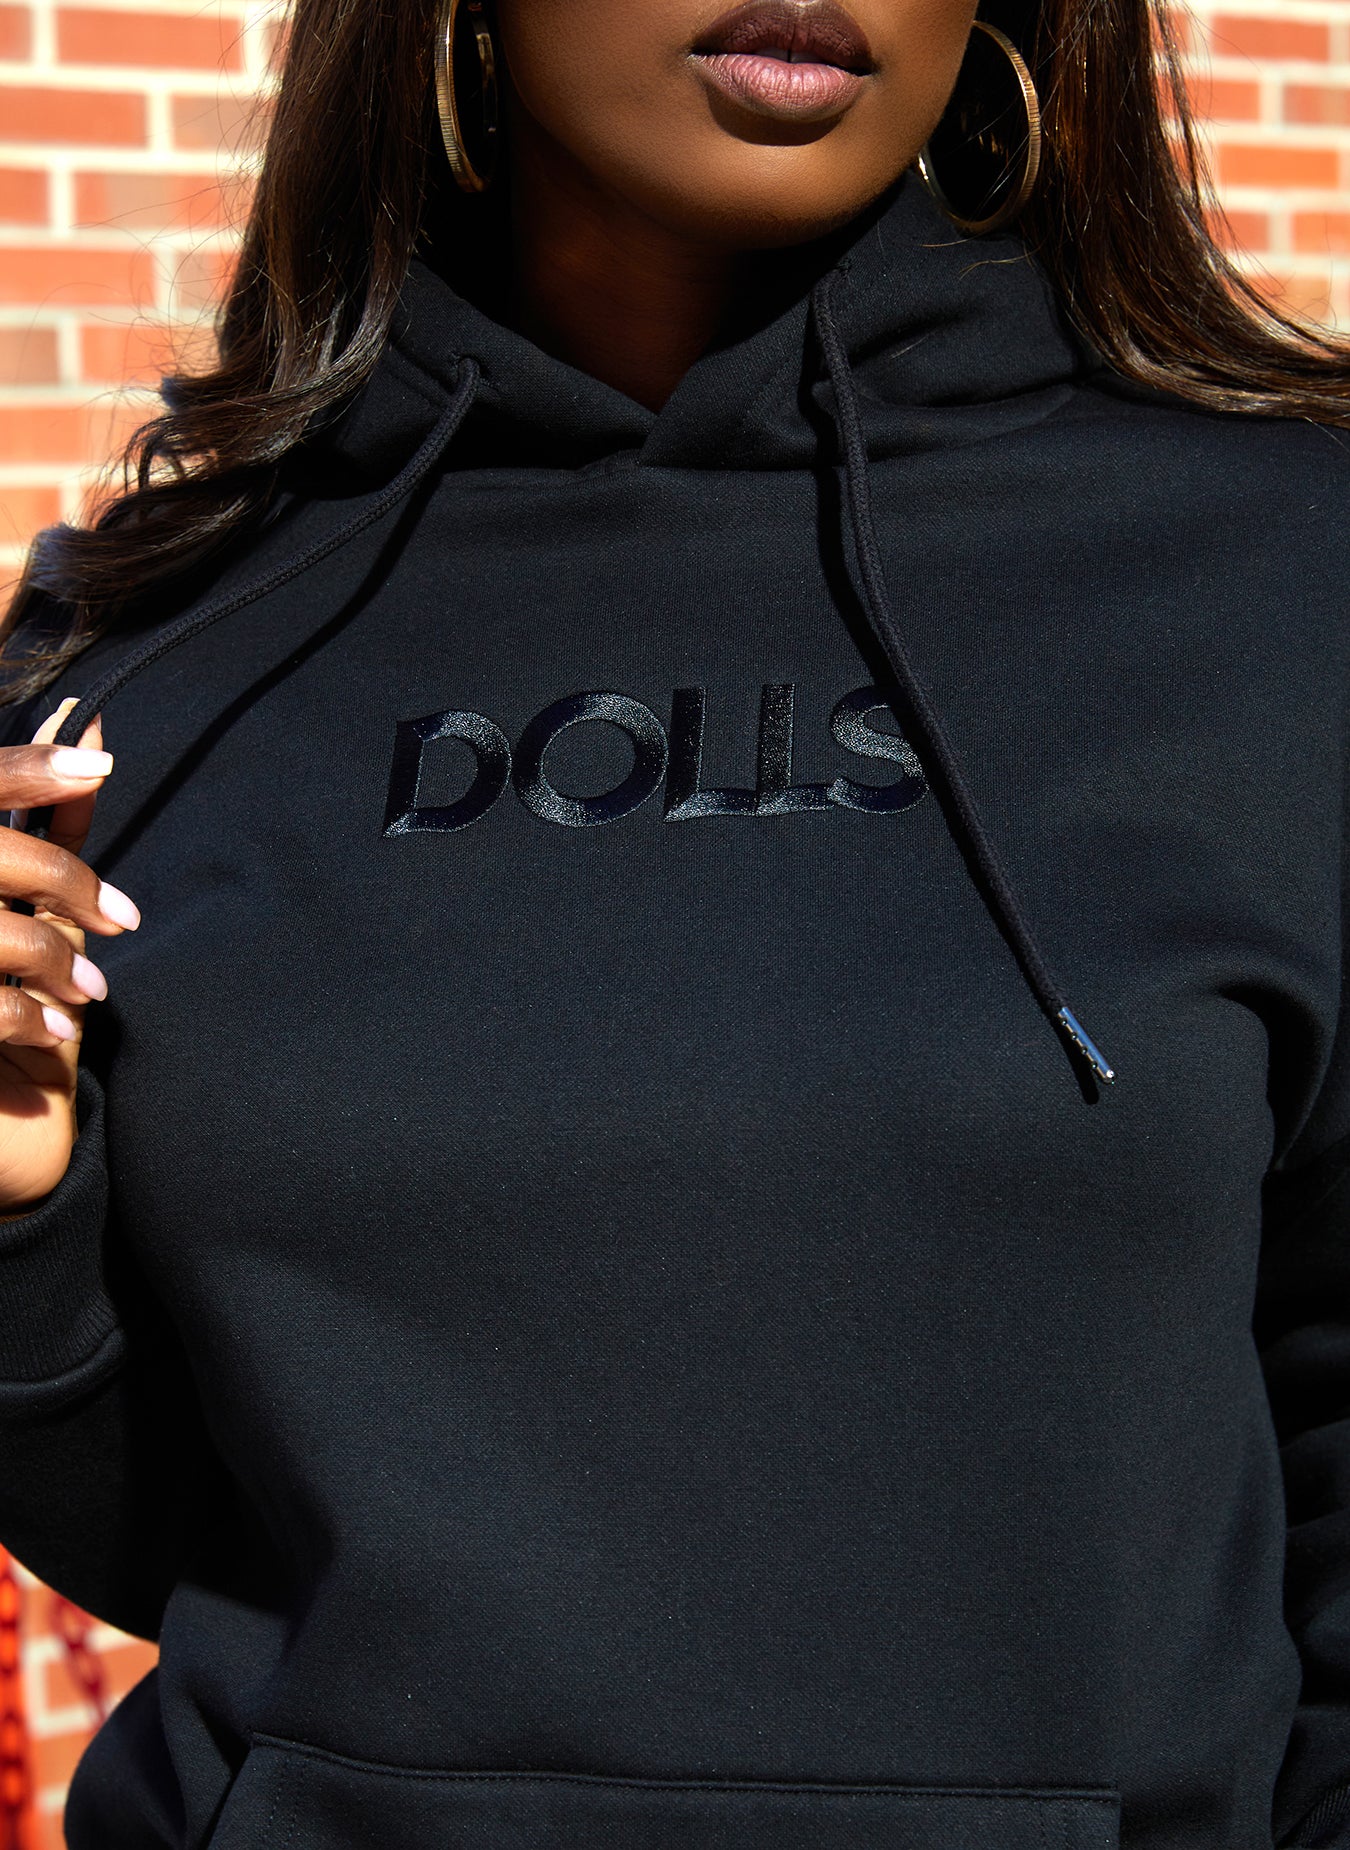 Black Total Doll Monogrammed Hooded Sweatshirt W. Pocket Plus Sizes